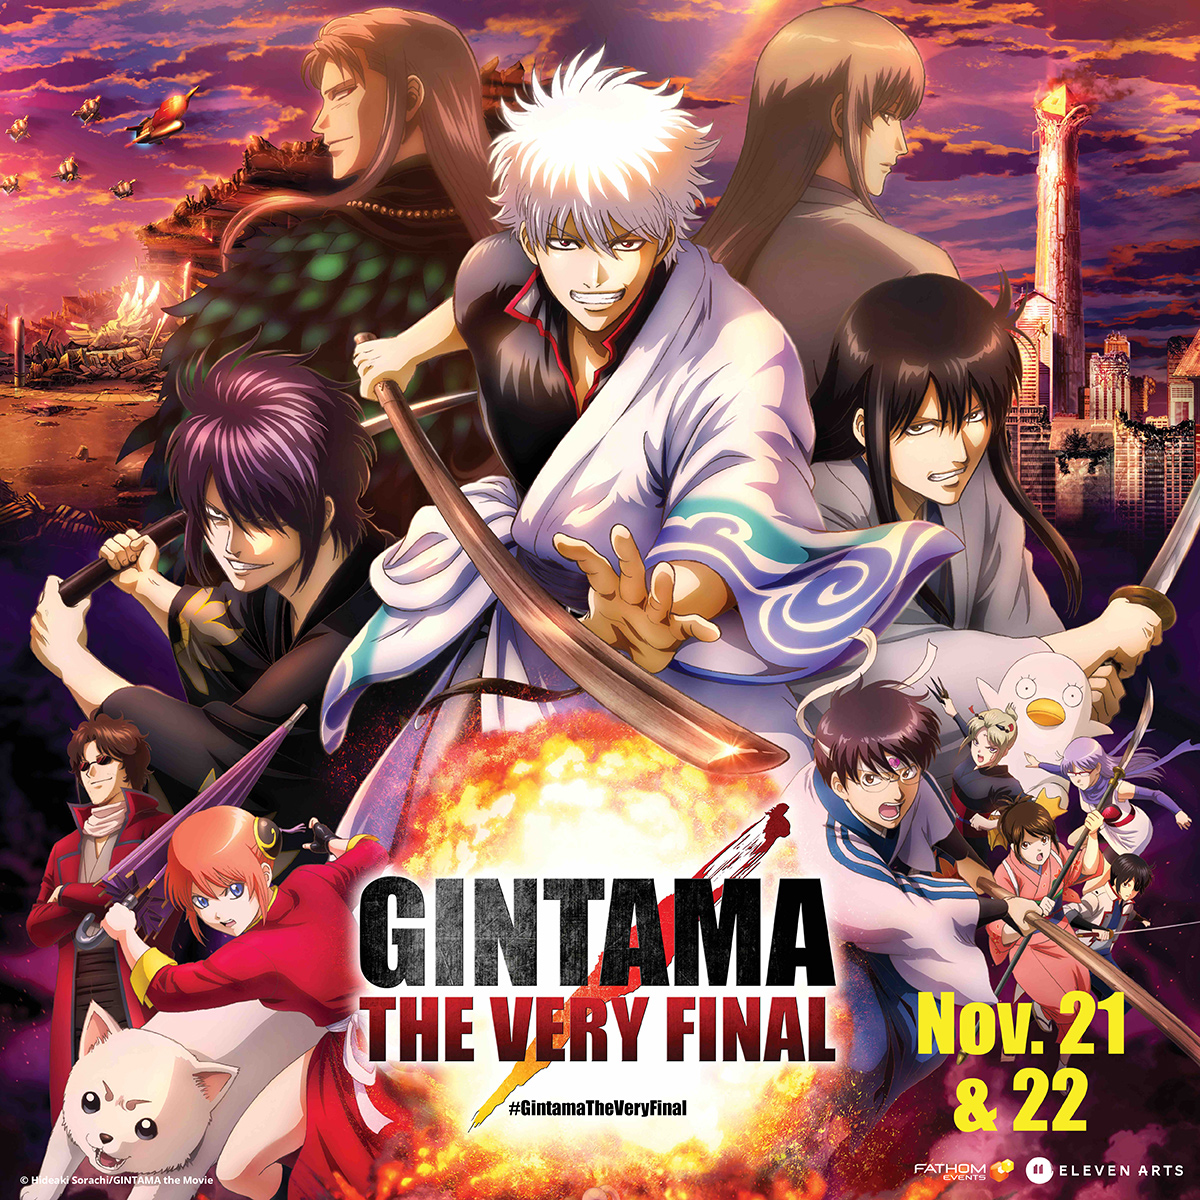 Gintama THE VERY FINAL: Nov 21 and 22